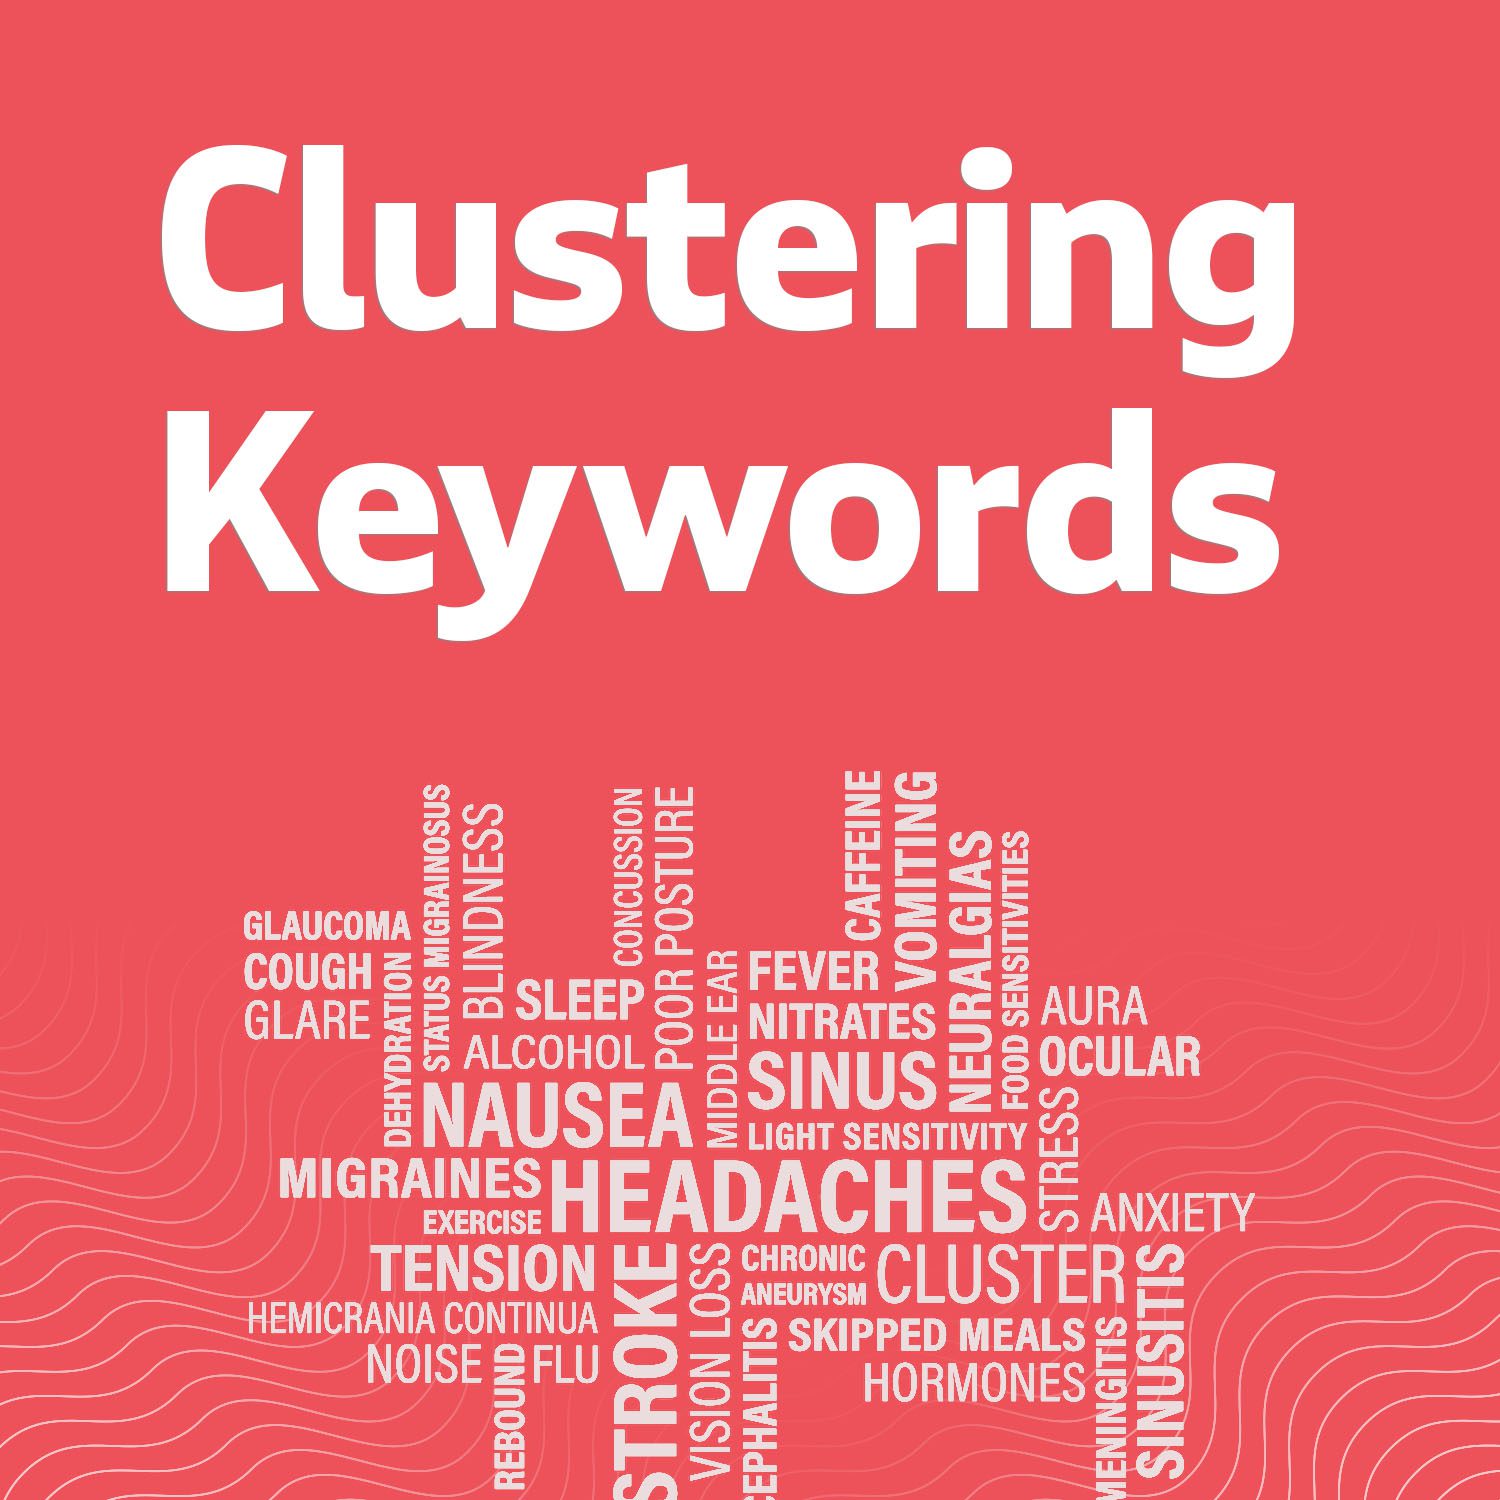 Cluster Keywords for SEO